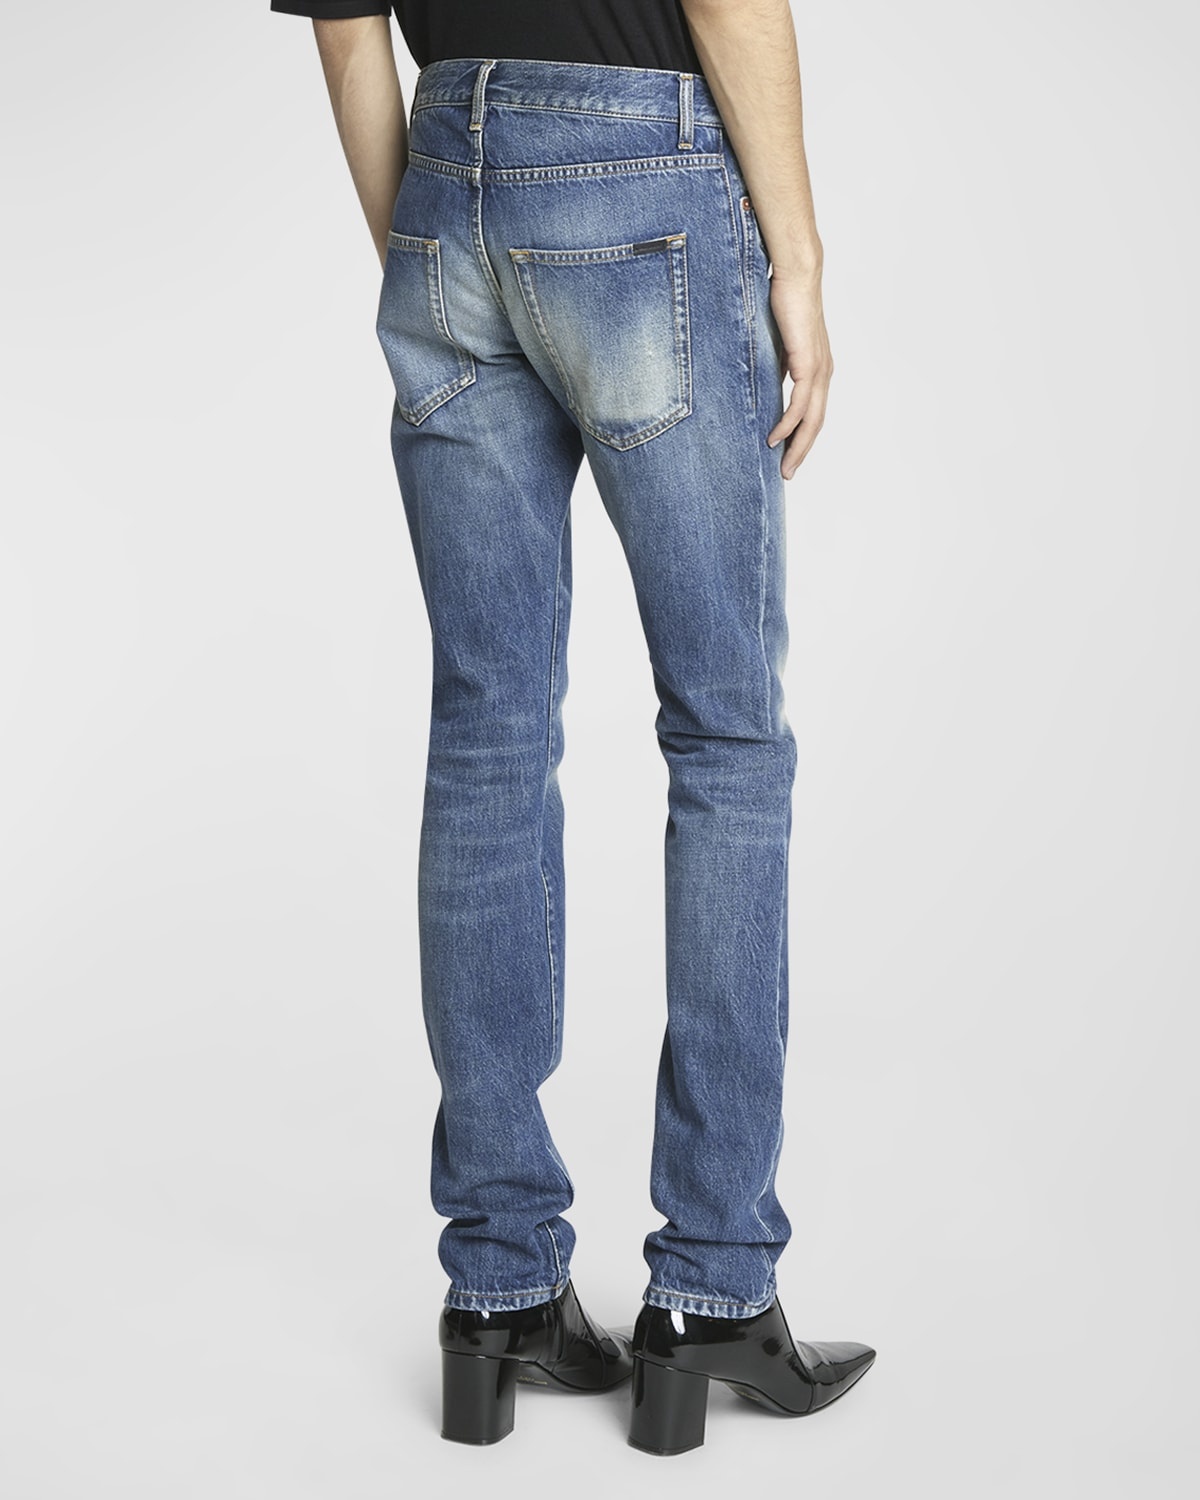 Men's Slim-Fit Faded Jeans - 4